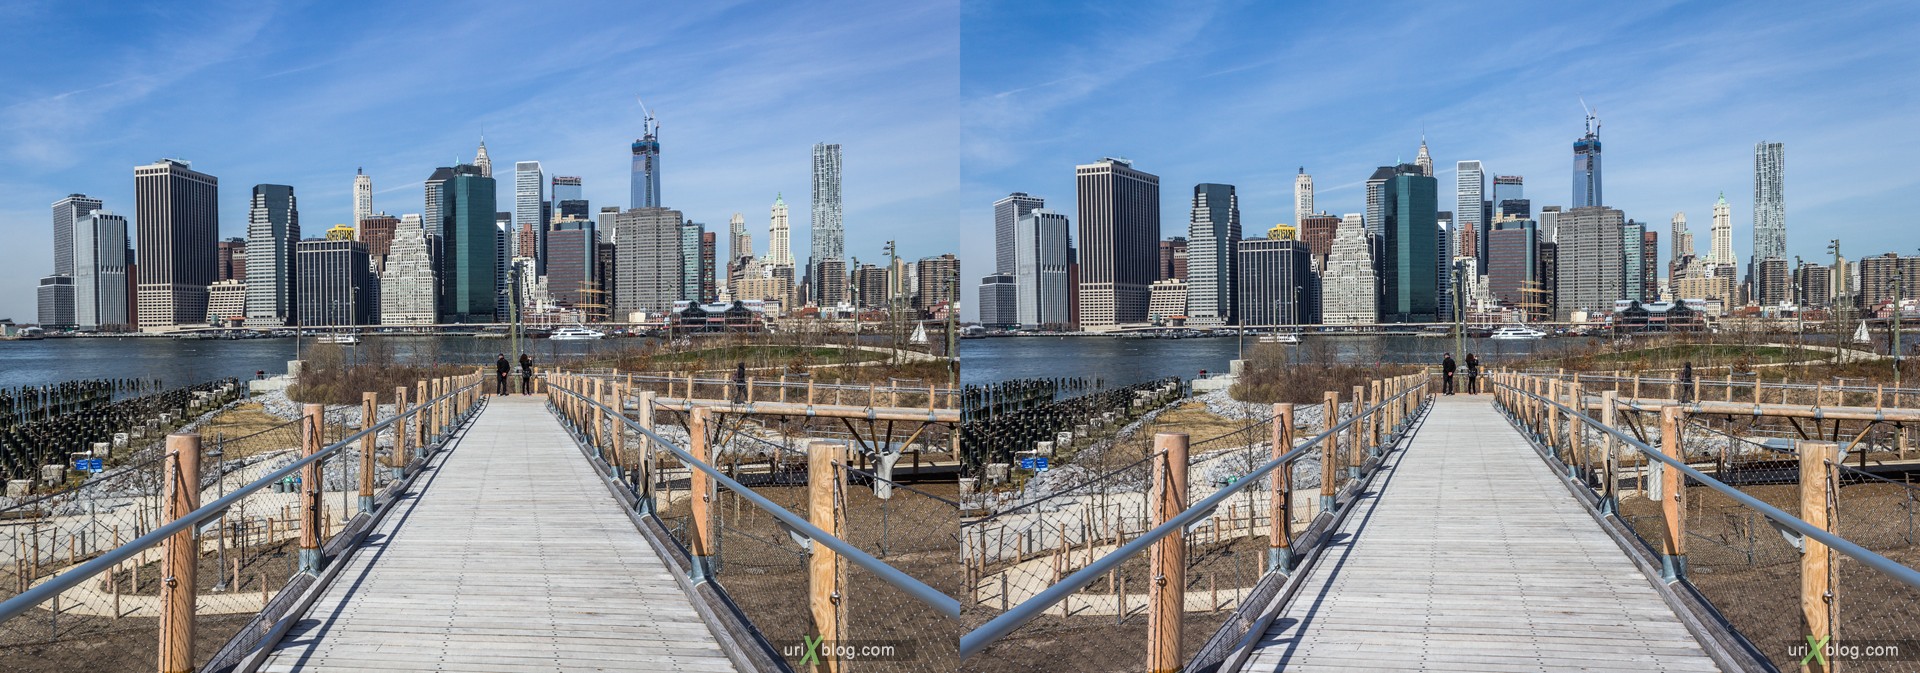 2013, Brooklyn Bridge парк, Бруклин, Нью-Йорк, США, 3D, перекрёстные стереопары, стерео, стереопара, стереопары